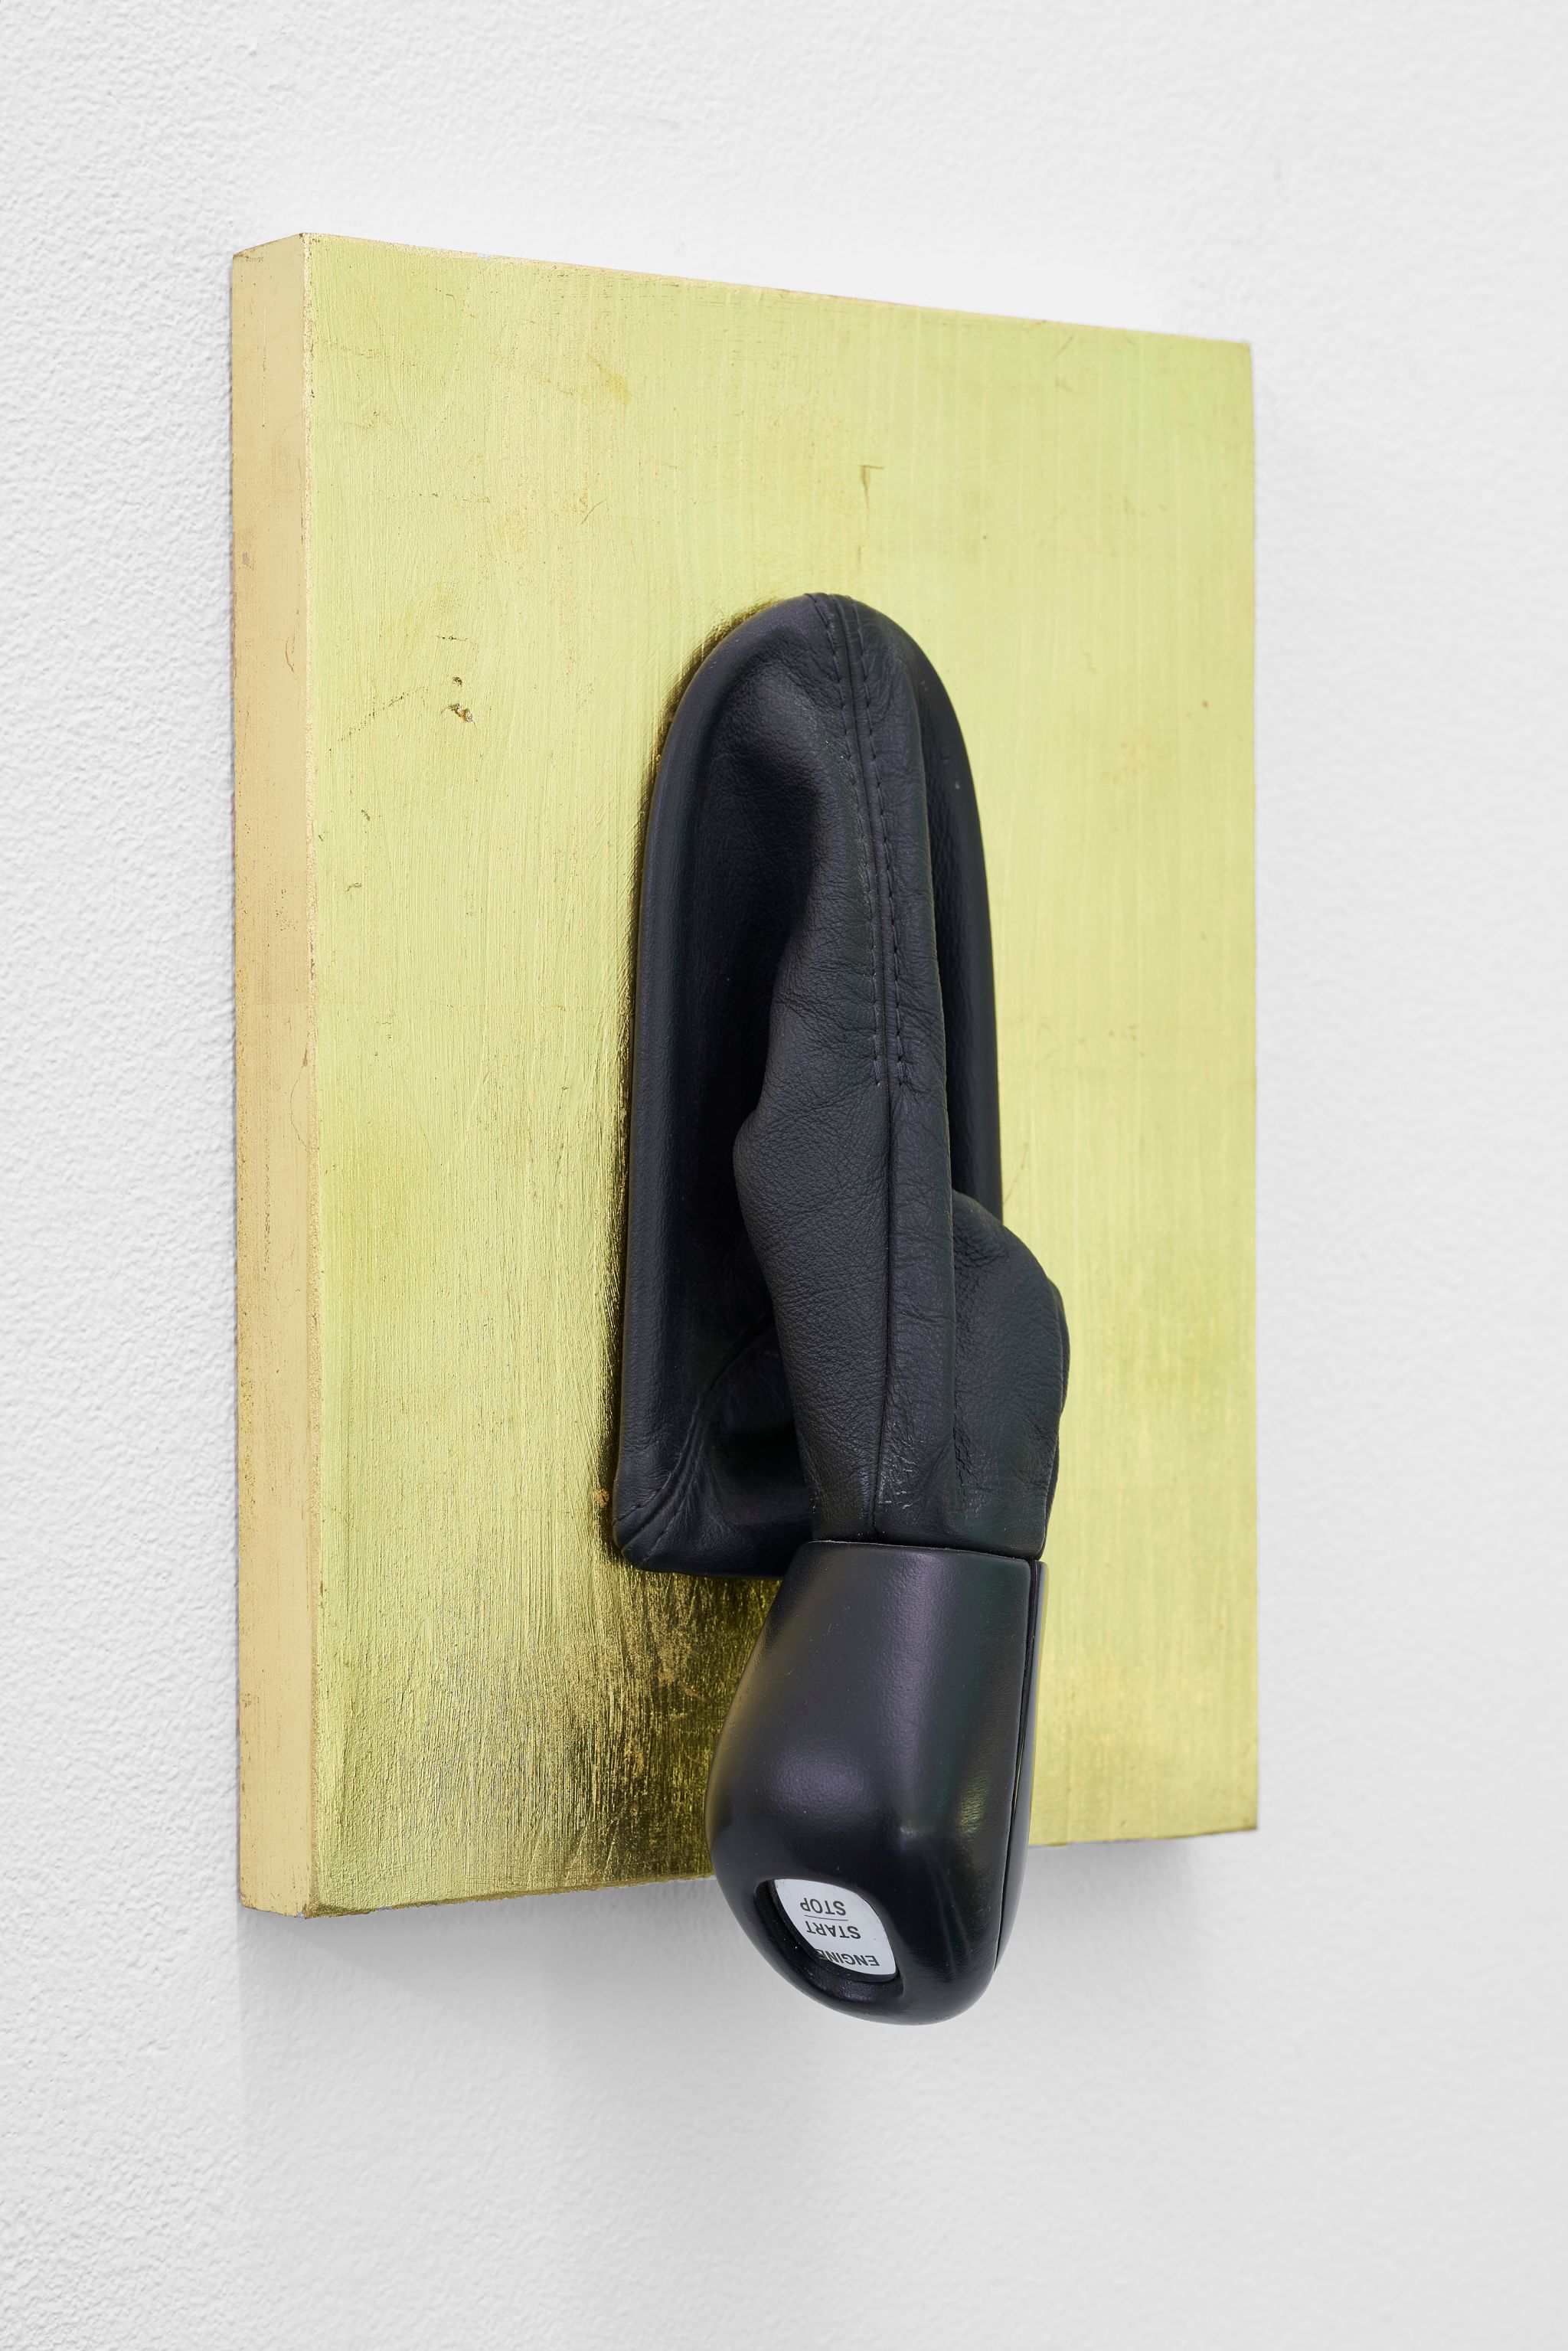 Alexandra Bircken, Oliver, 2017, Holz, Blattgold, Schaltknüppel (Mercedes), 28.5 ⁠× ⁠18.3 ⁠× ⁠10.5 ⁠⁠cm